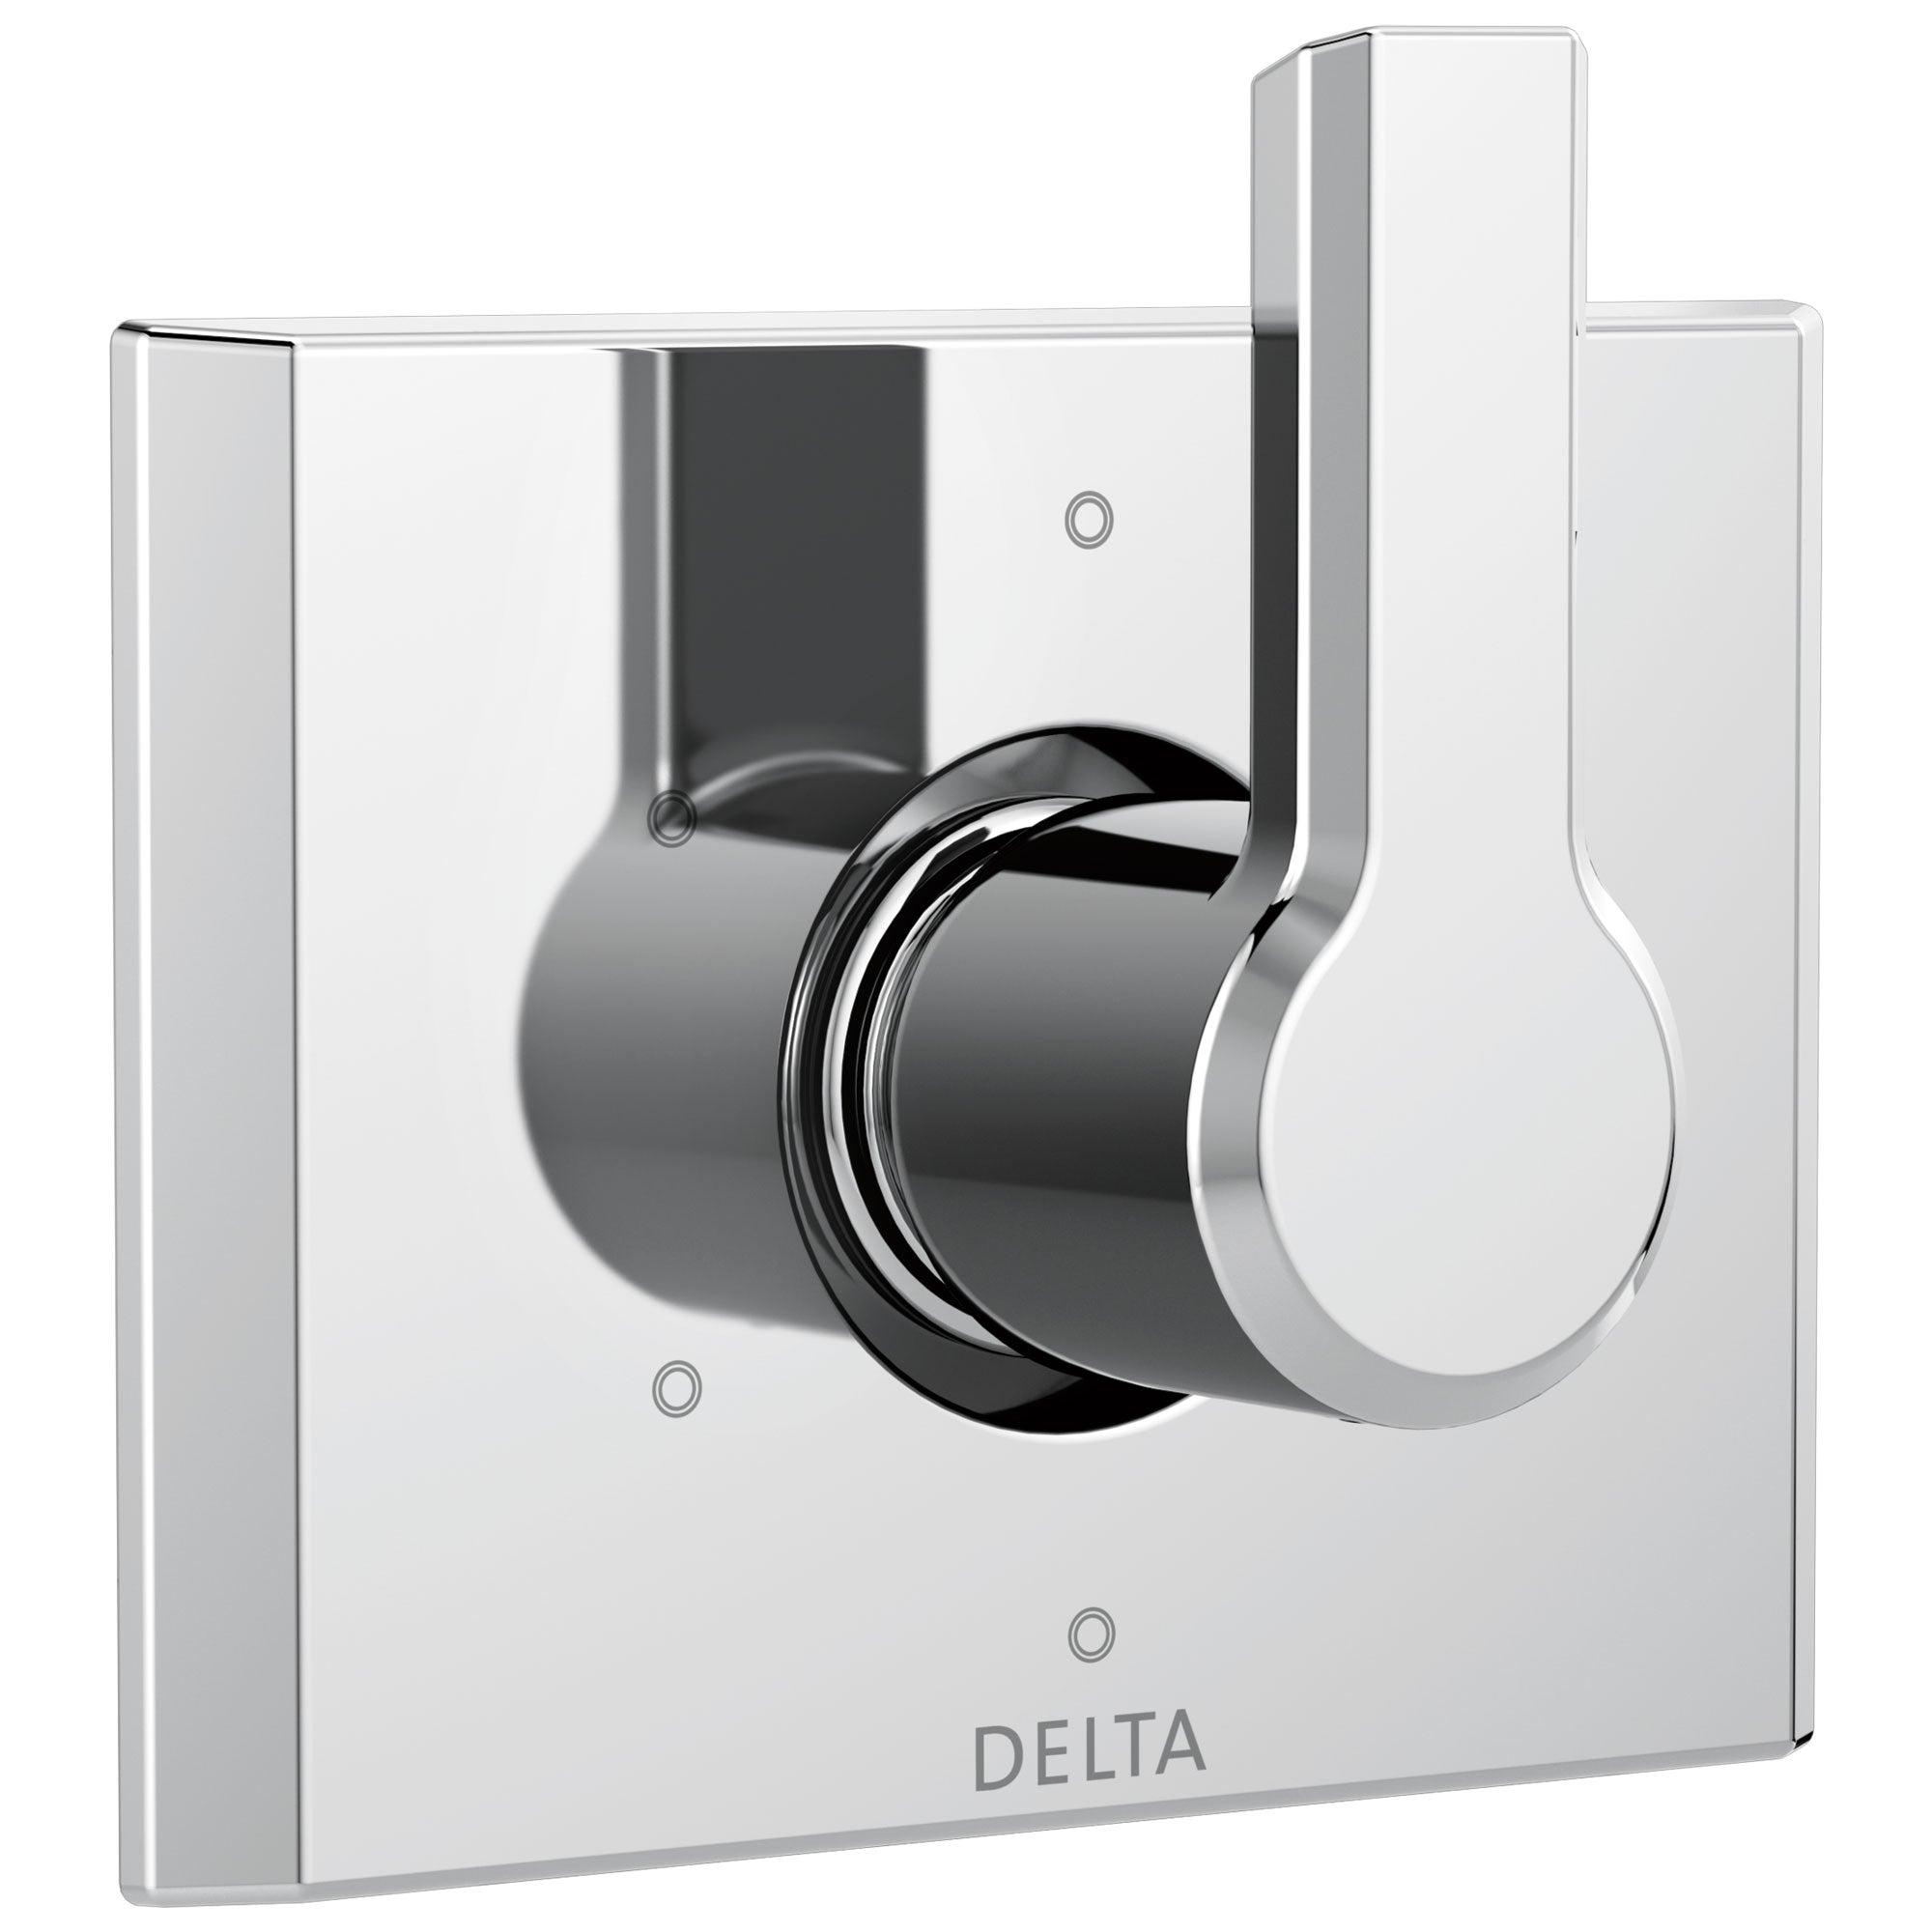 Delta Pivotal Modern Chrome Finish 6-Setting 3 Outlet Port Shower System Diverter Includes Lever Handle and Rough-in Valve D3562V